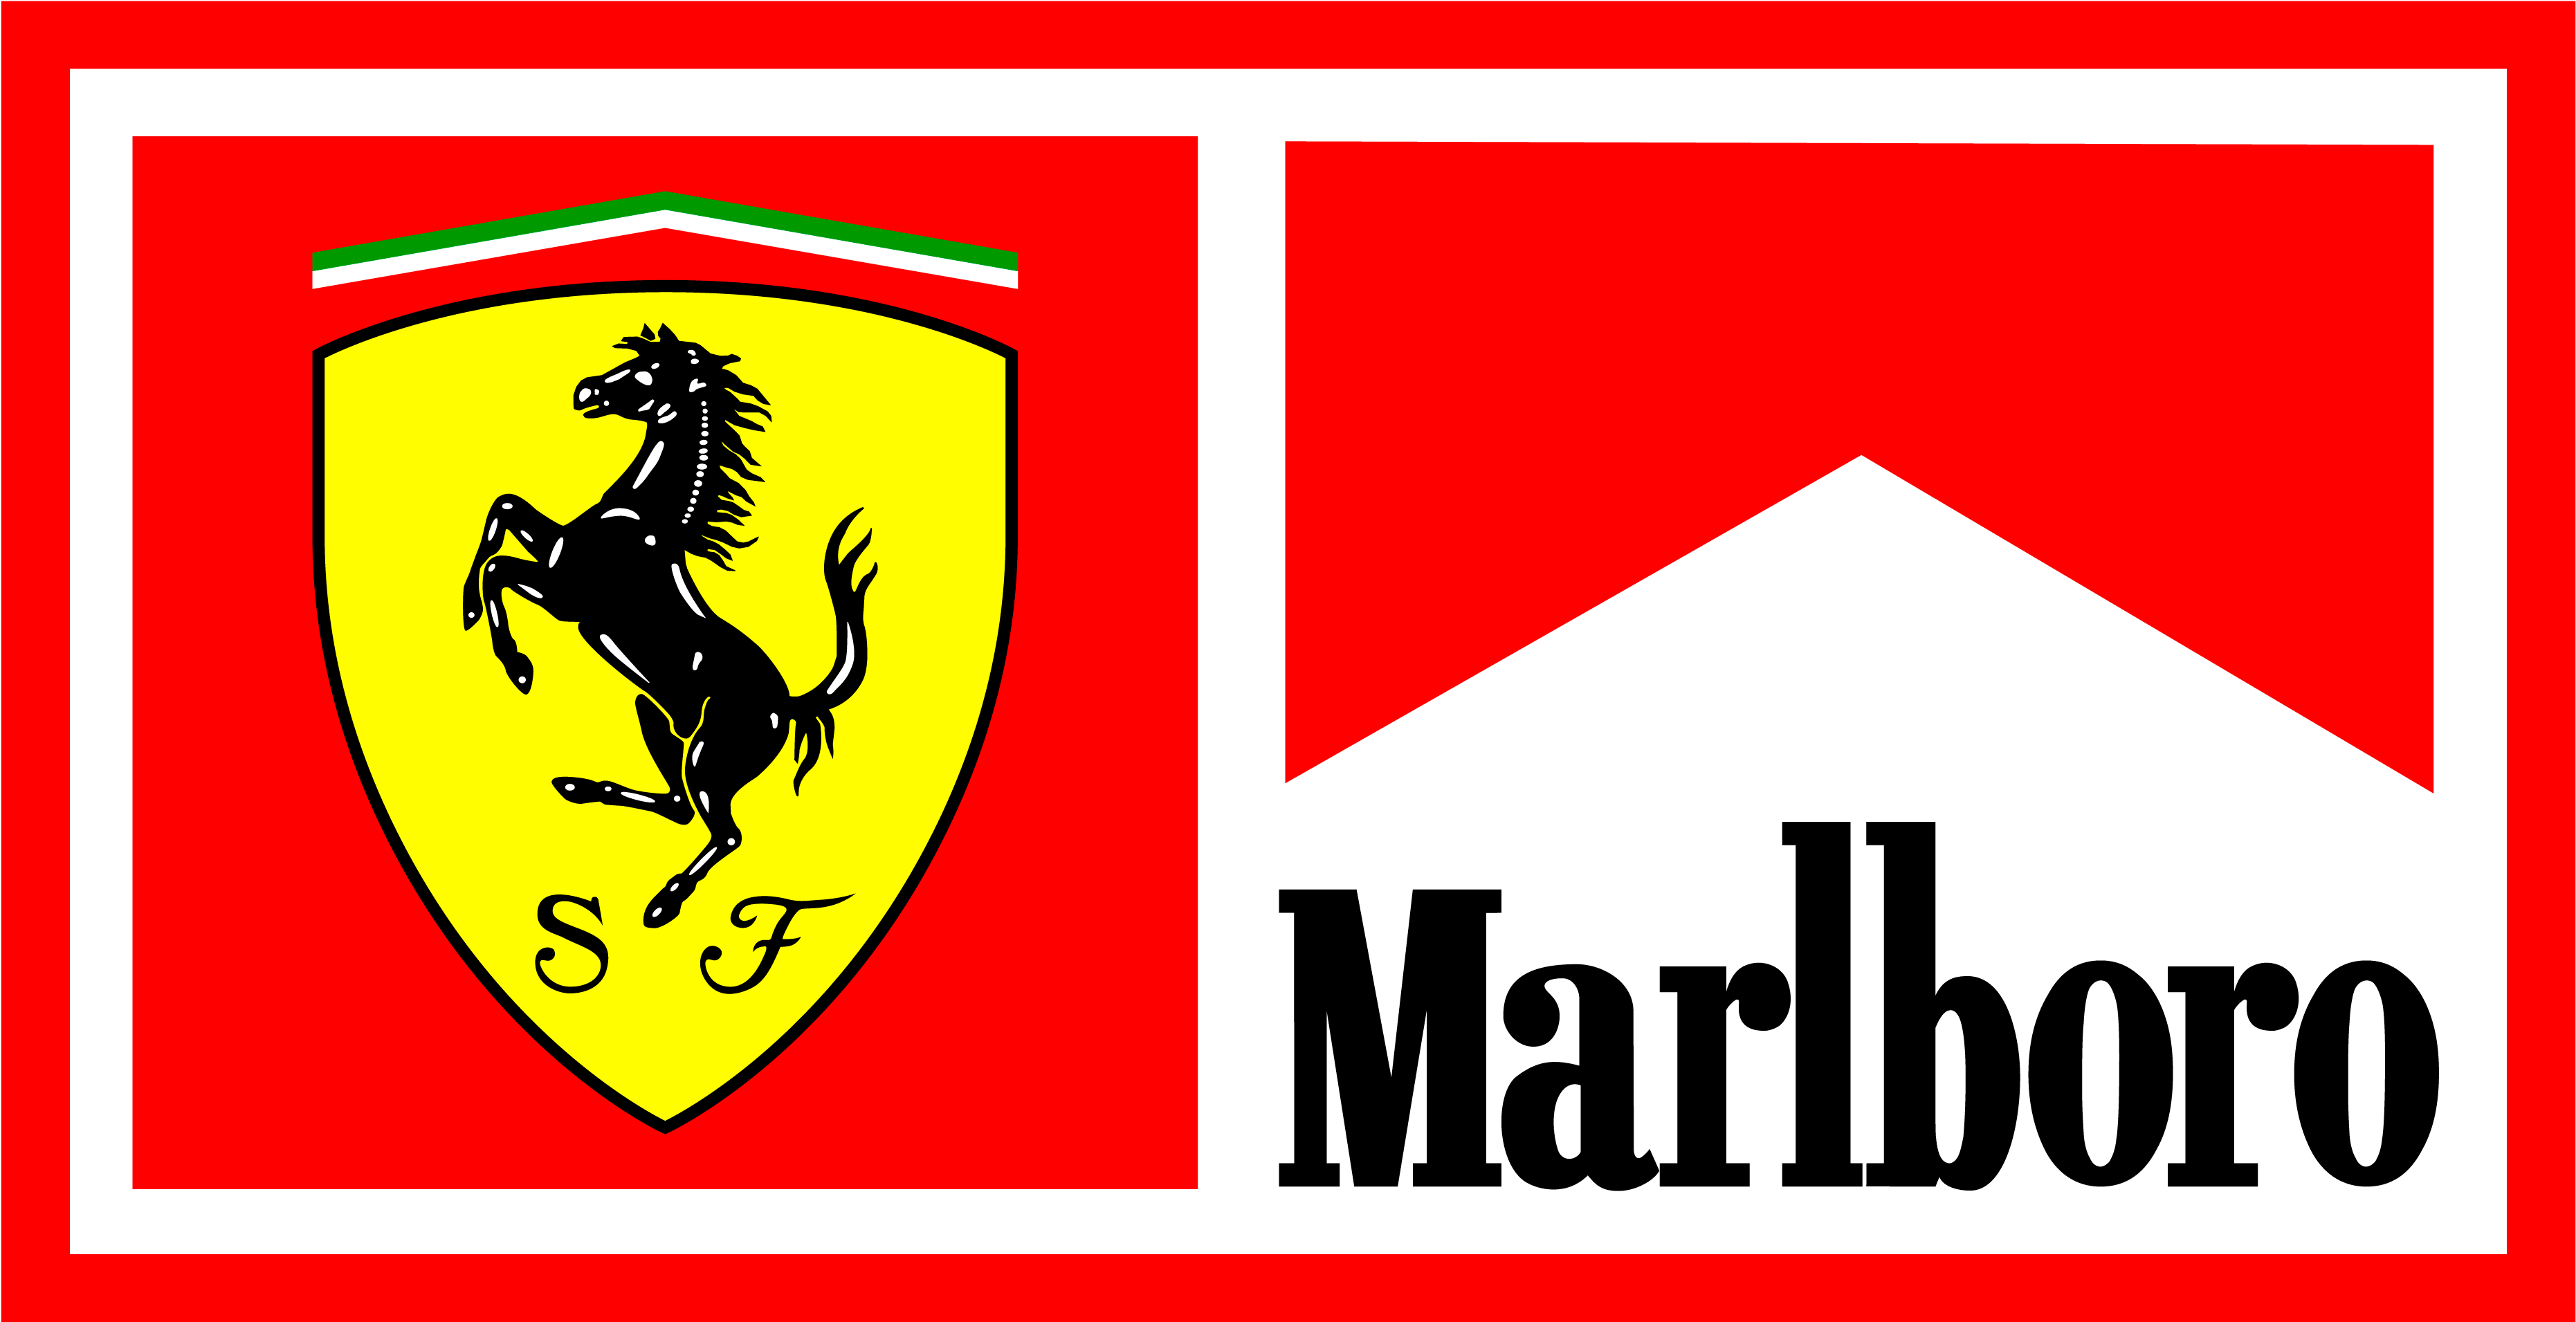 Ferrariand Marlboro Logos